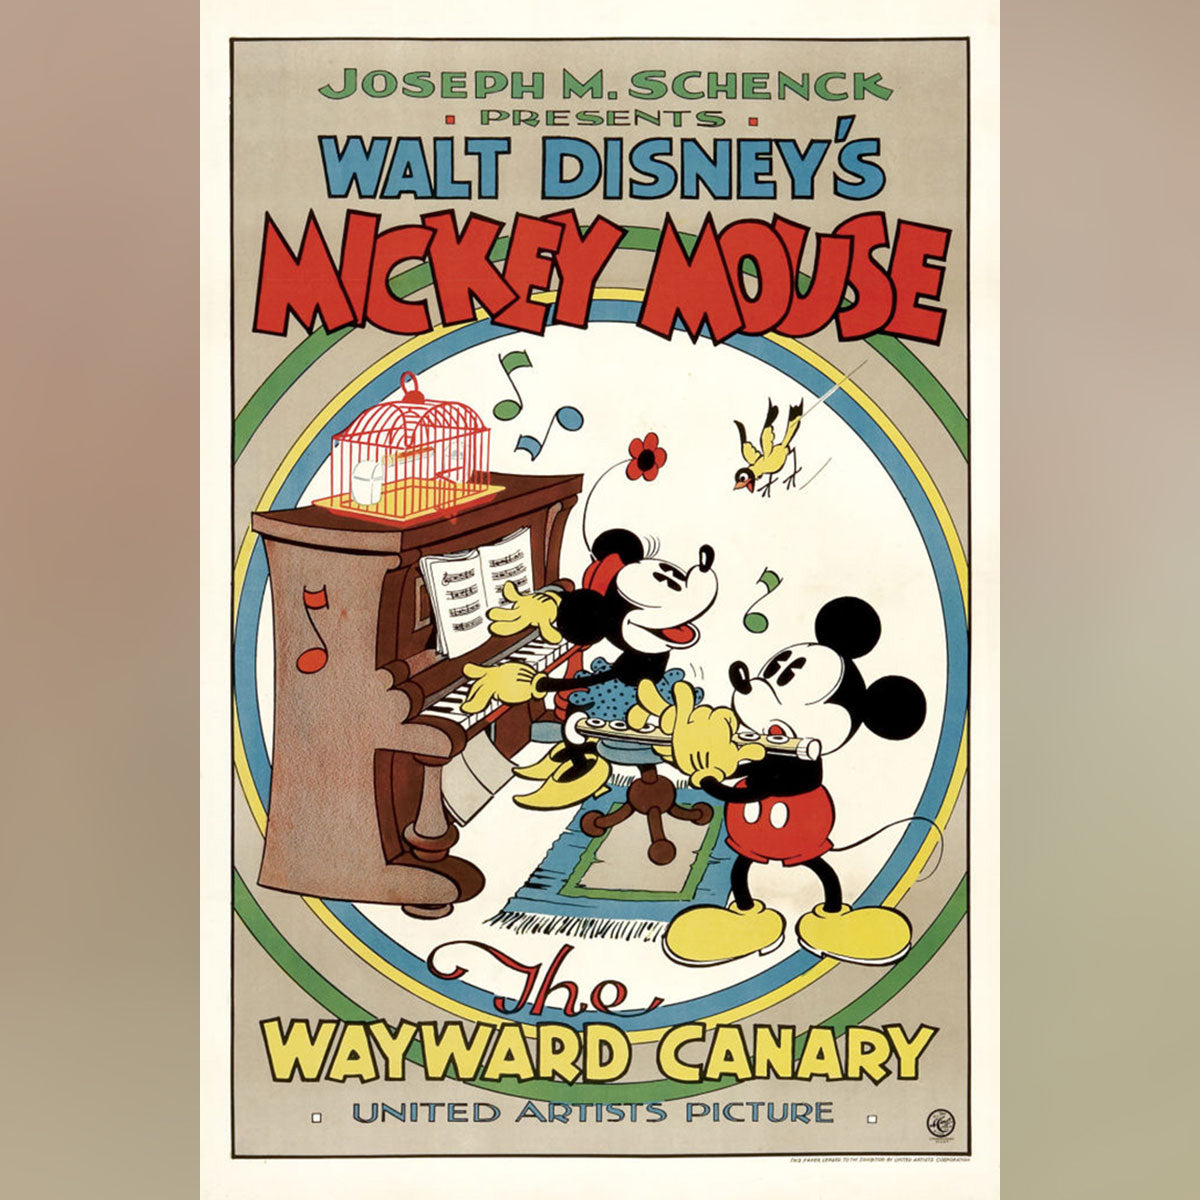 Original Movie Poster of Wayward Canary, The (1932)